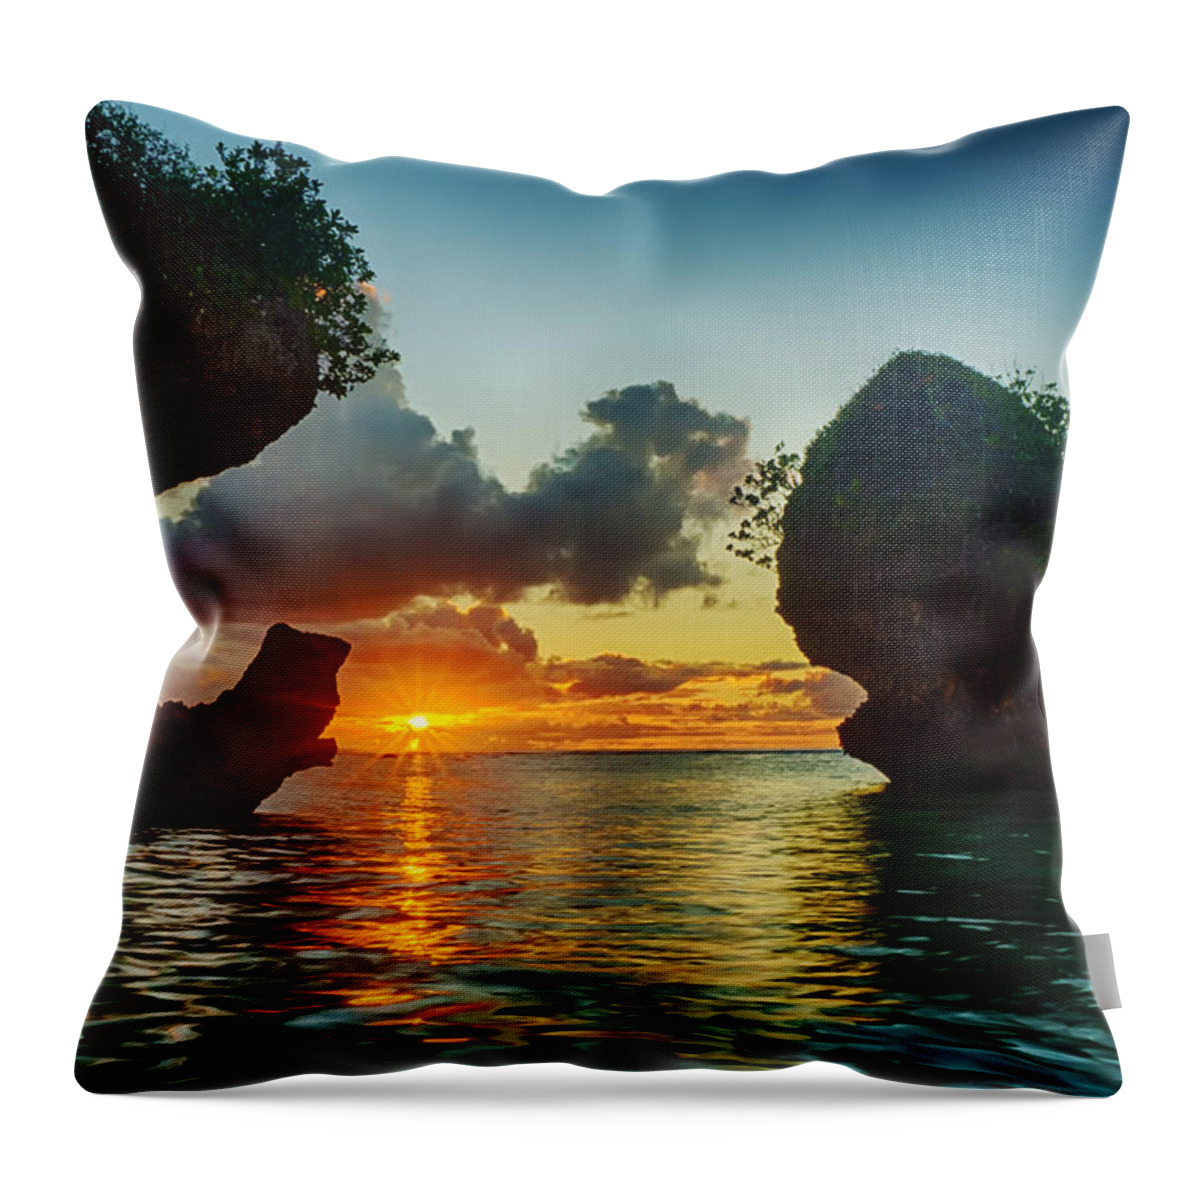 Pristine Throw Pillow featuring the photograph Equatorial Evening by Amanda Jones